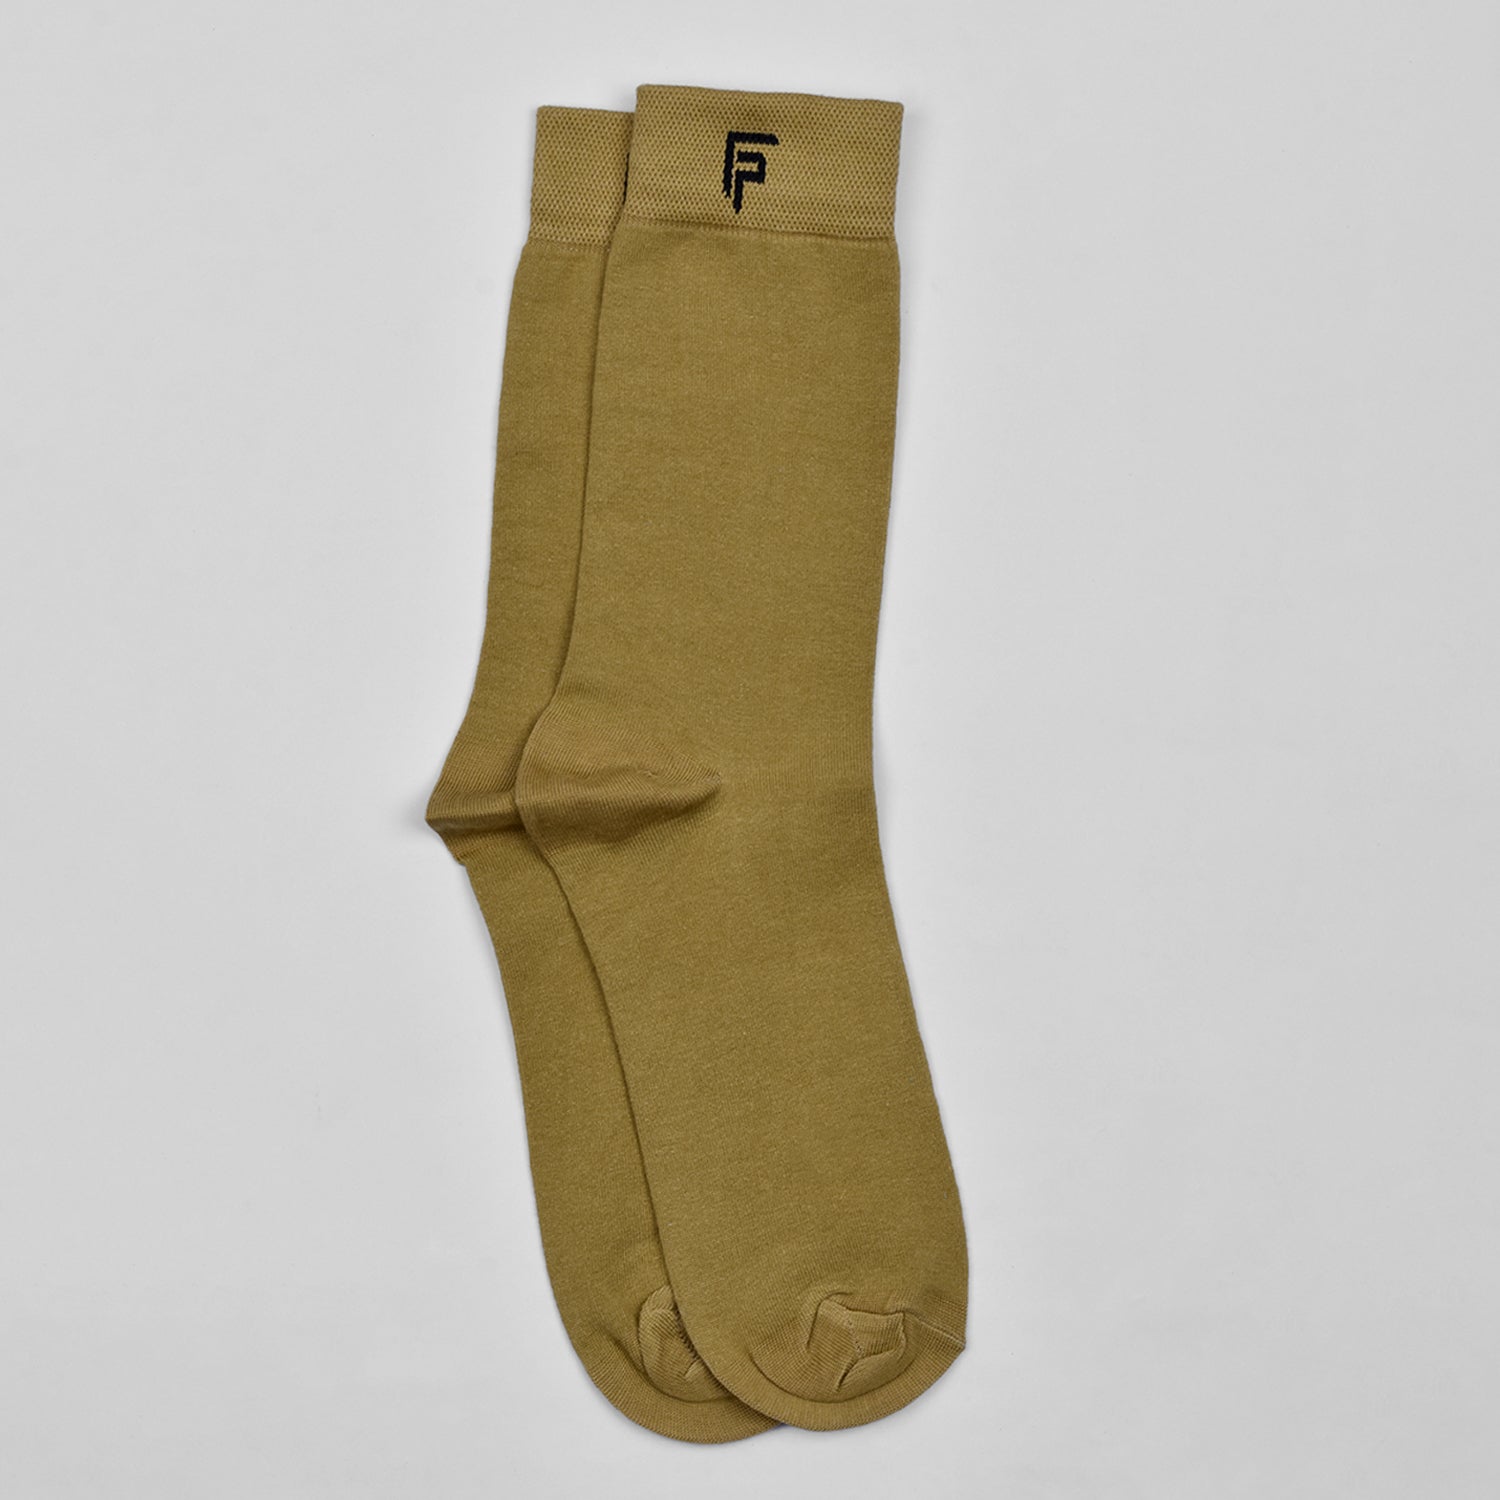 Footprints Men's Formal Organic Cotton & Bamboo Odour free Socks Khaki Pack OF 5